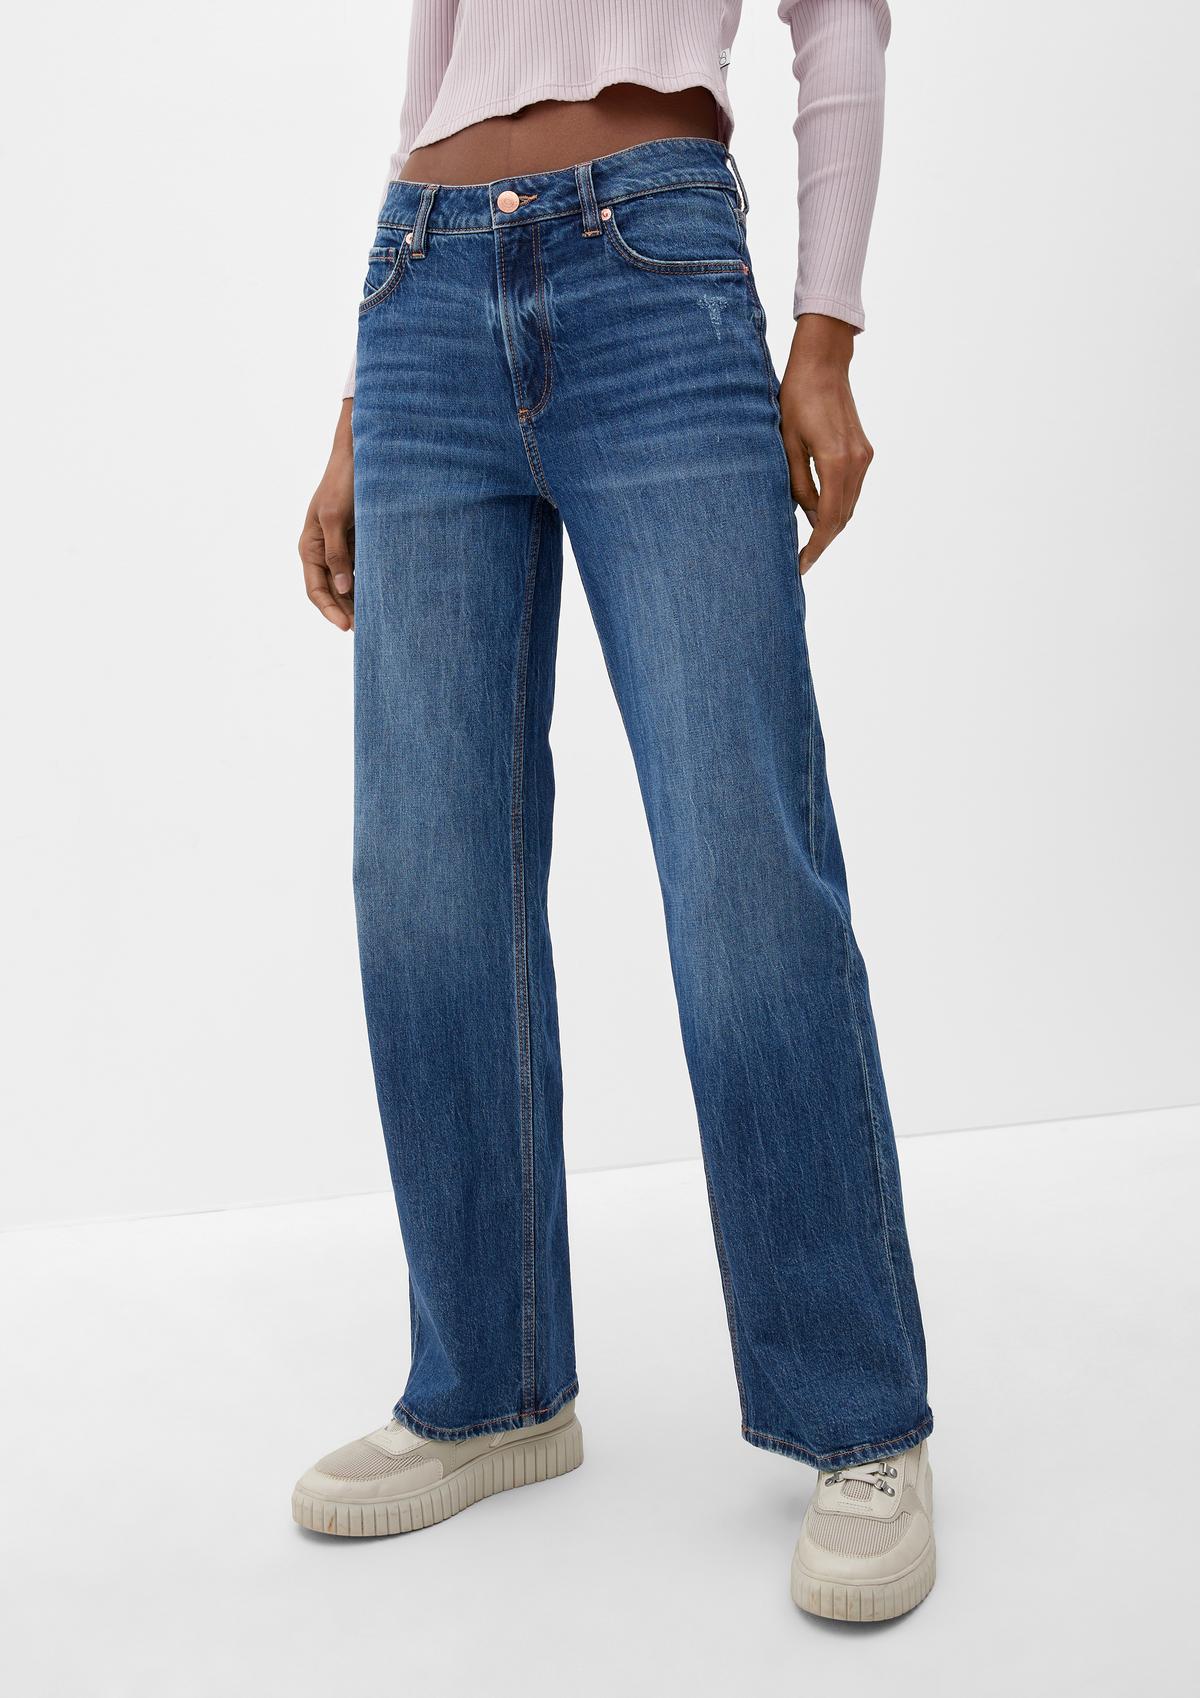 Jeans Catie / Slim - High / / blau Fit Leg Rise Wide